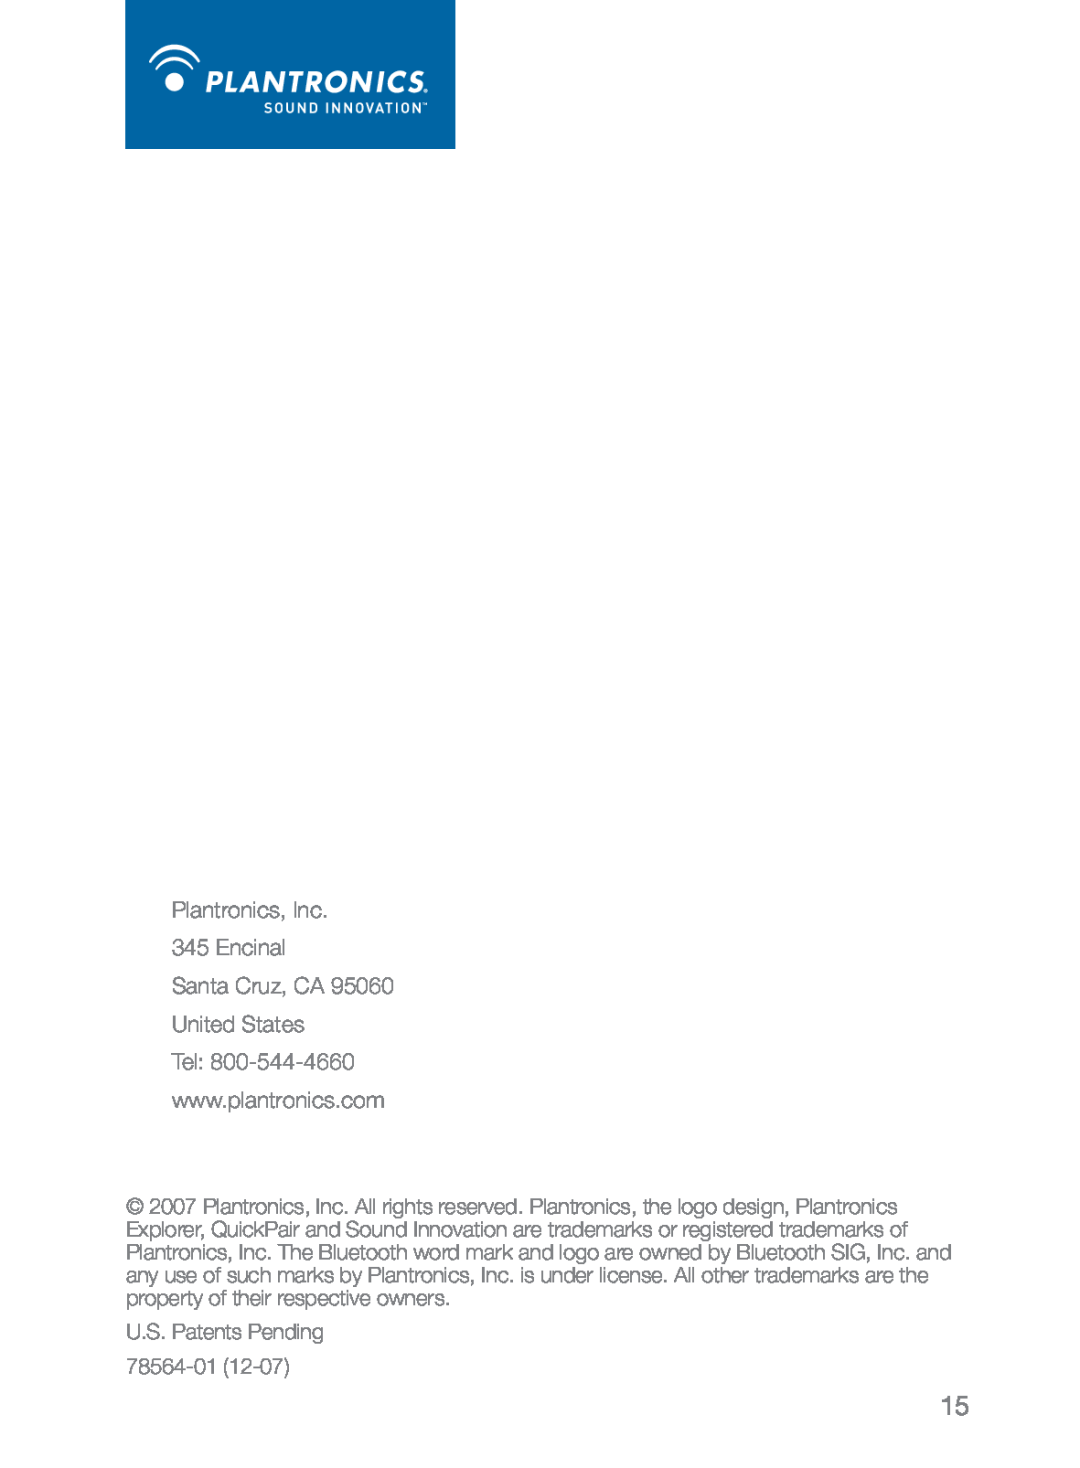 Plantronics 360 manual Plantronics, Inc 345 Encinal Santa Cruz, CA 95060 United States, U.S. Patents Pending 78564-01 